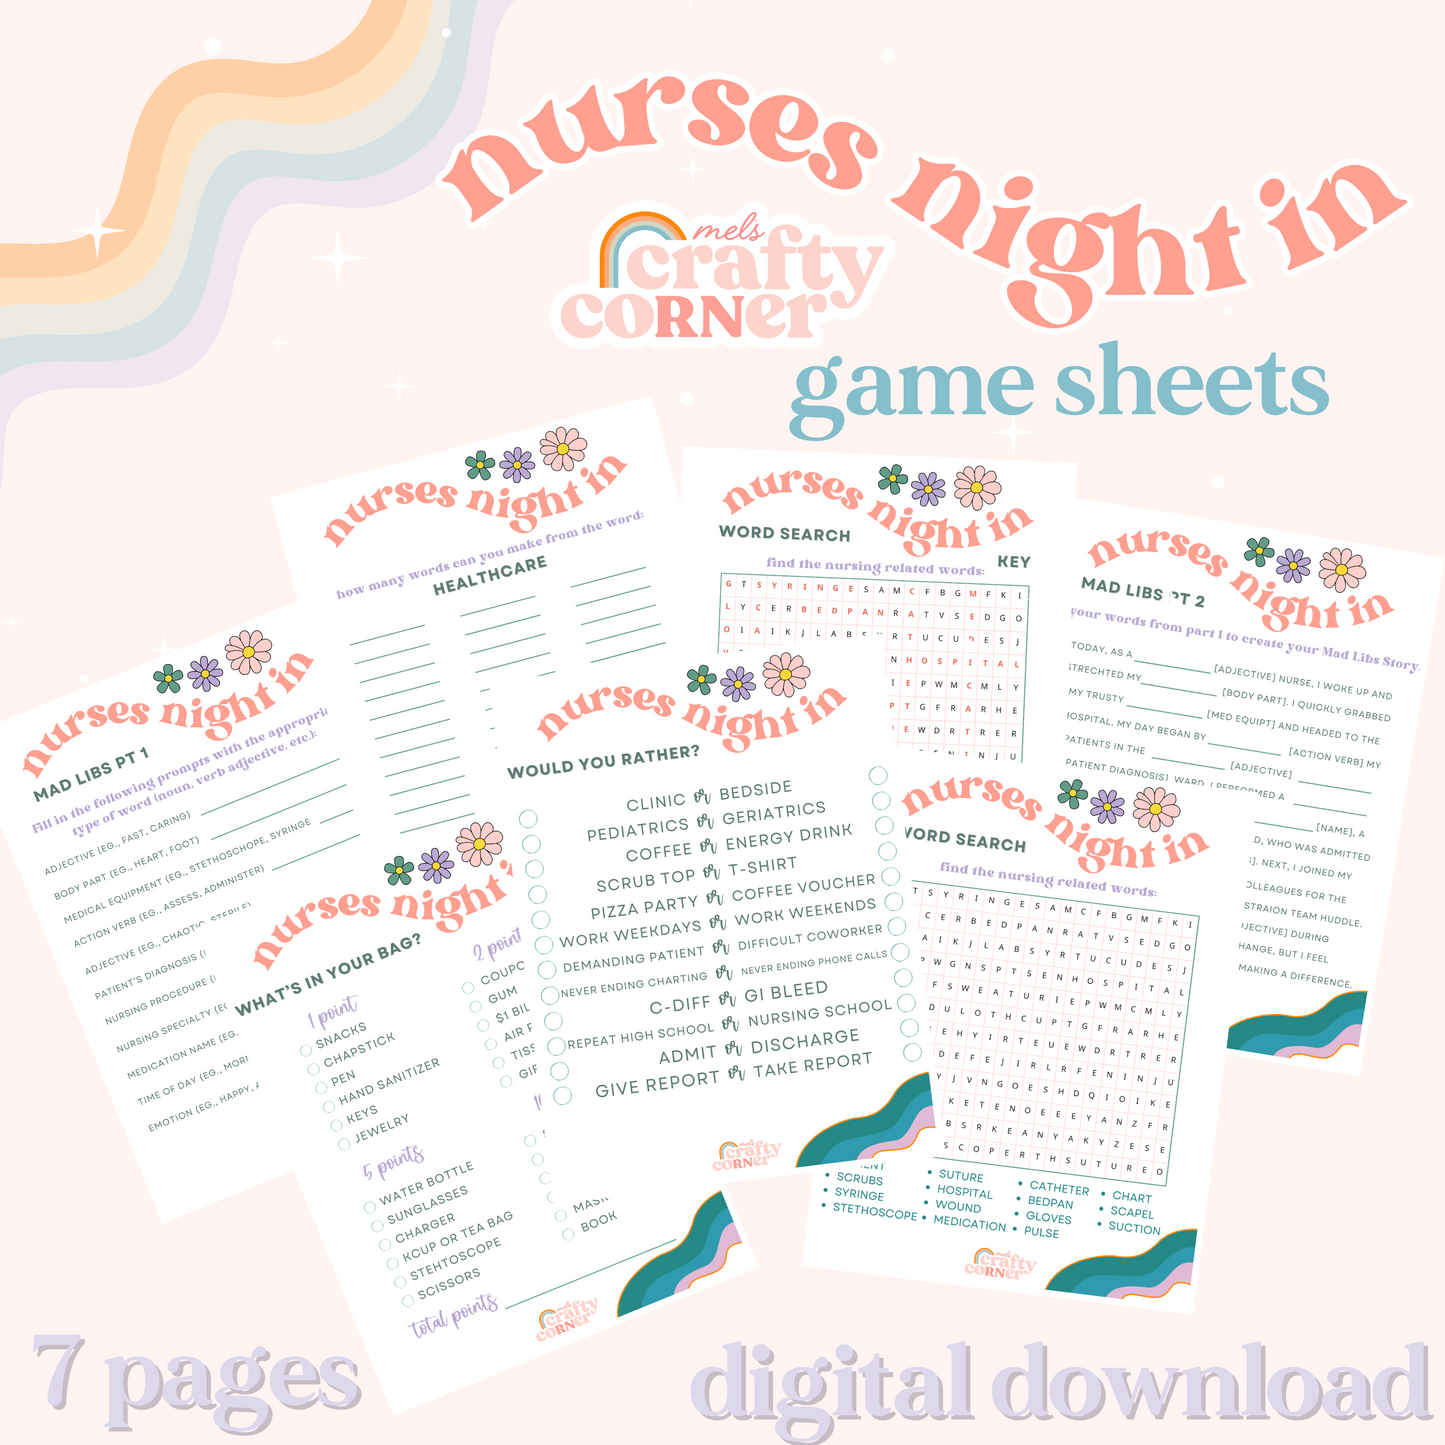 Nurses Night In Game Sheets| Digital Download